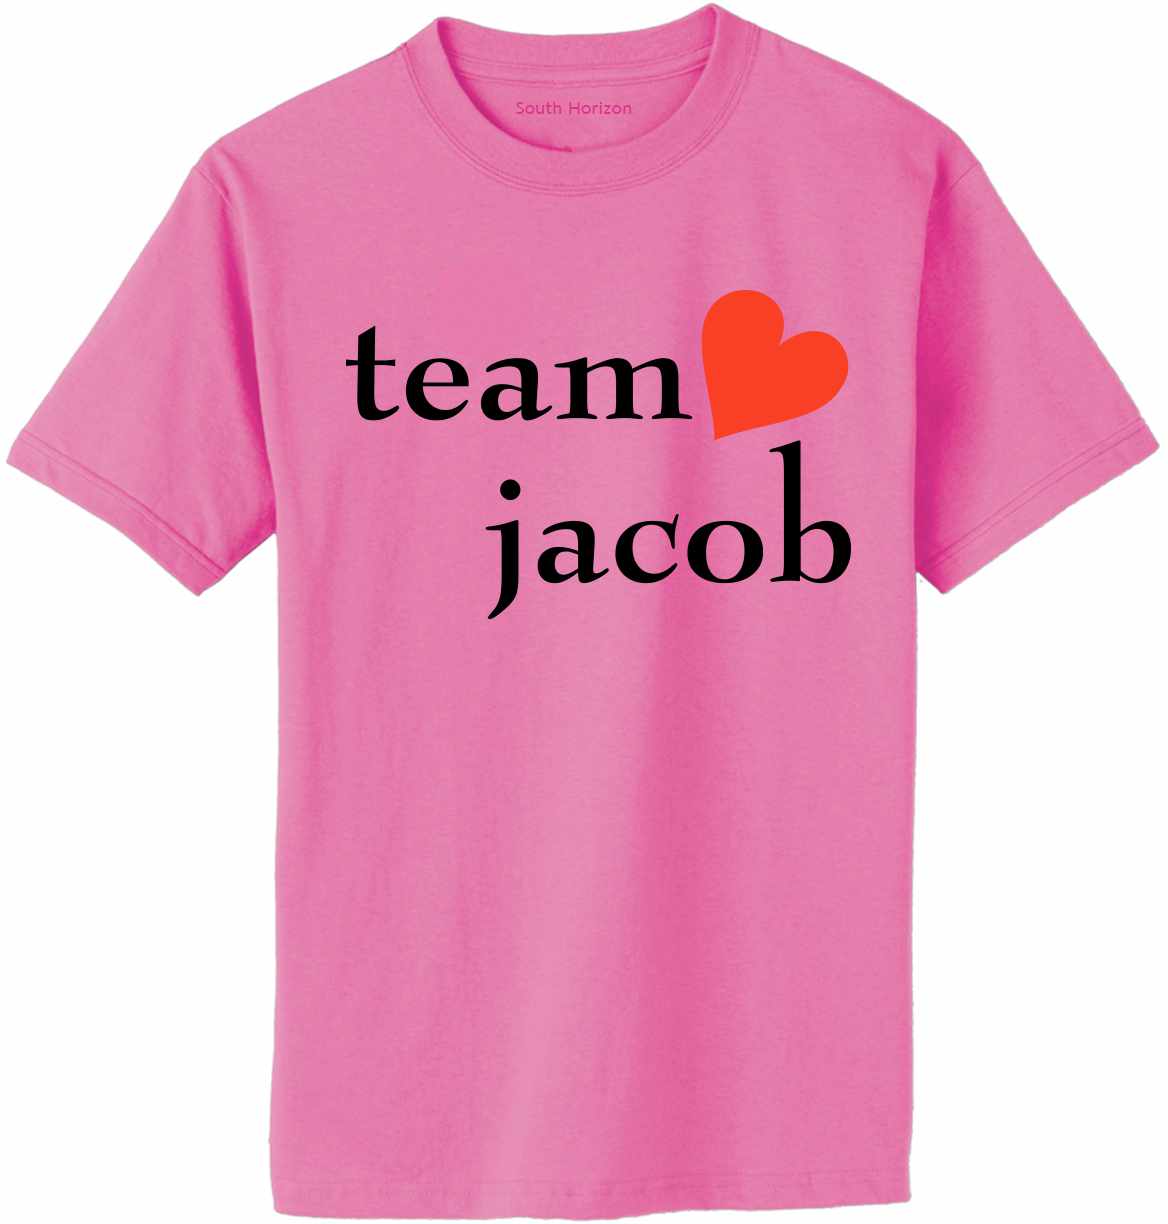 TEAM JACOB Adult T-Shirt (#275-1)